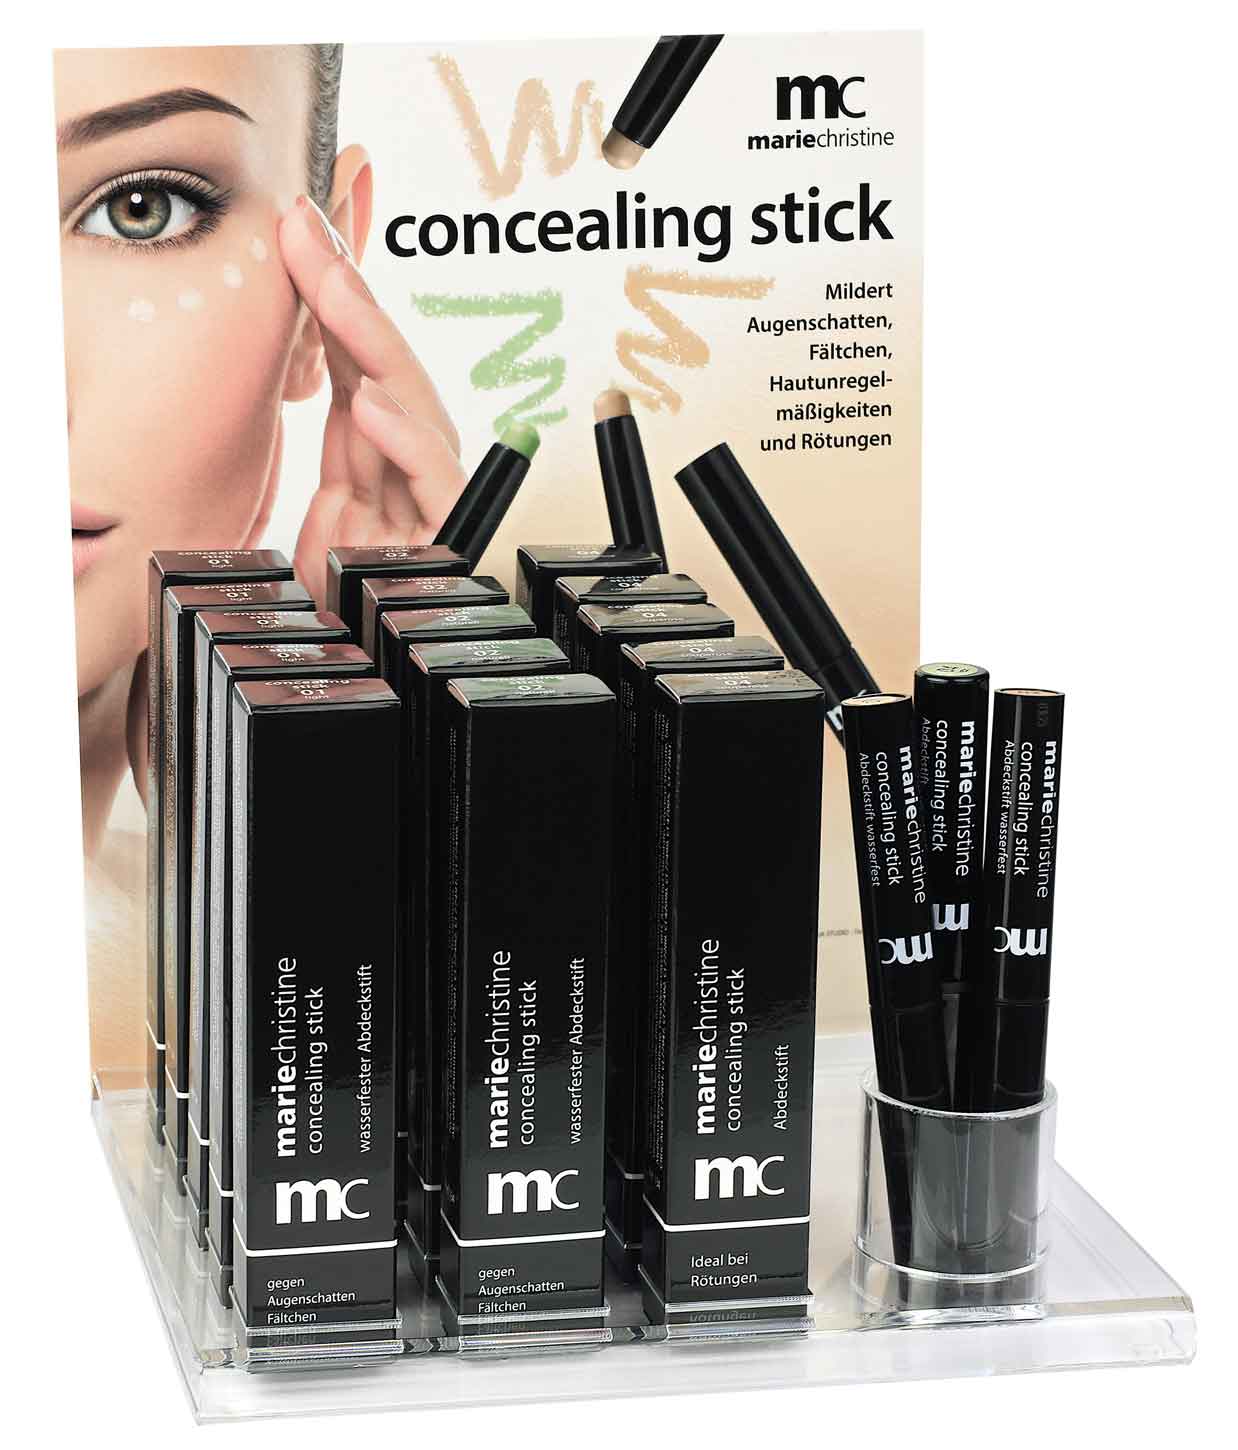 mc mariechristine Display Concealing Stick